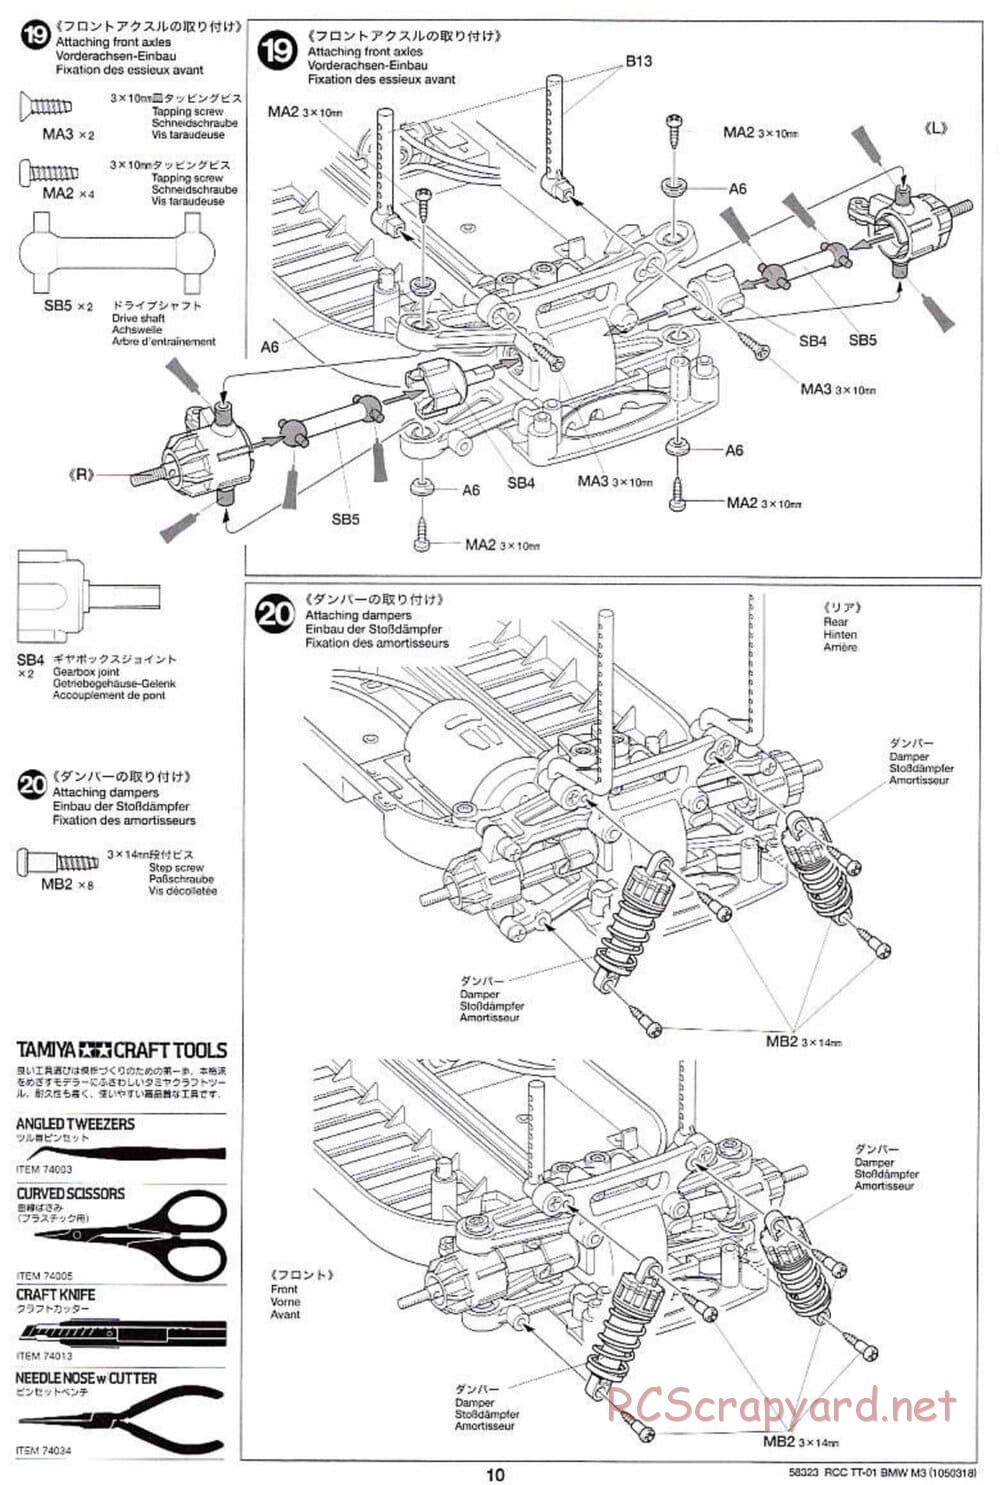 Tamiya - Schnitzer BMW M3 Sport Evo - TT-01 Chassis - Manual - Page 10